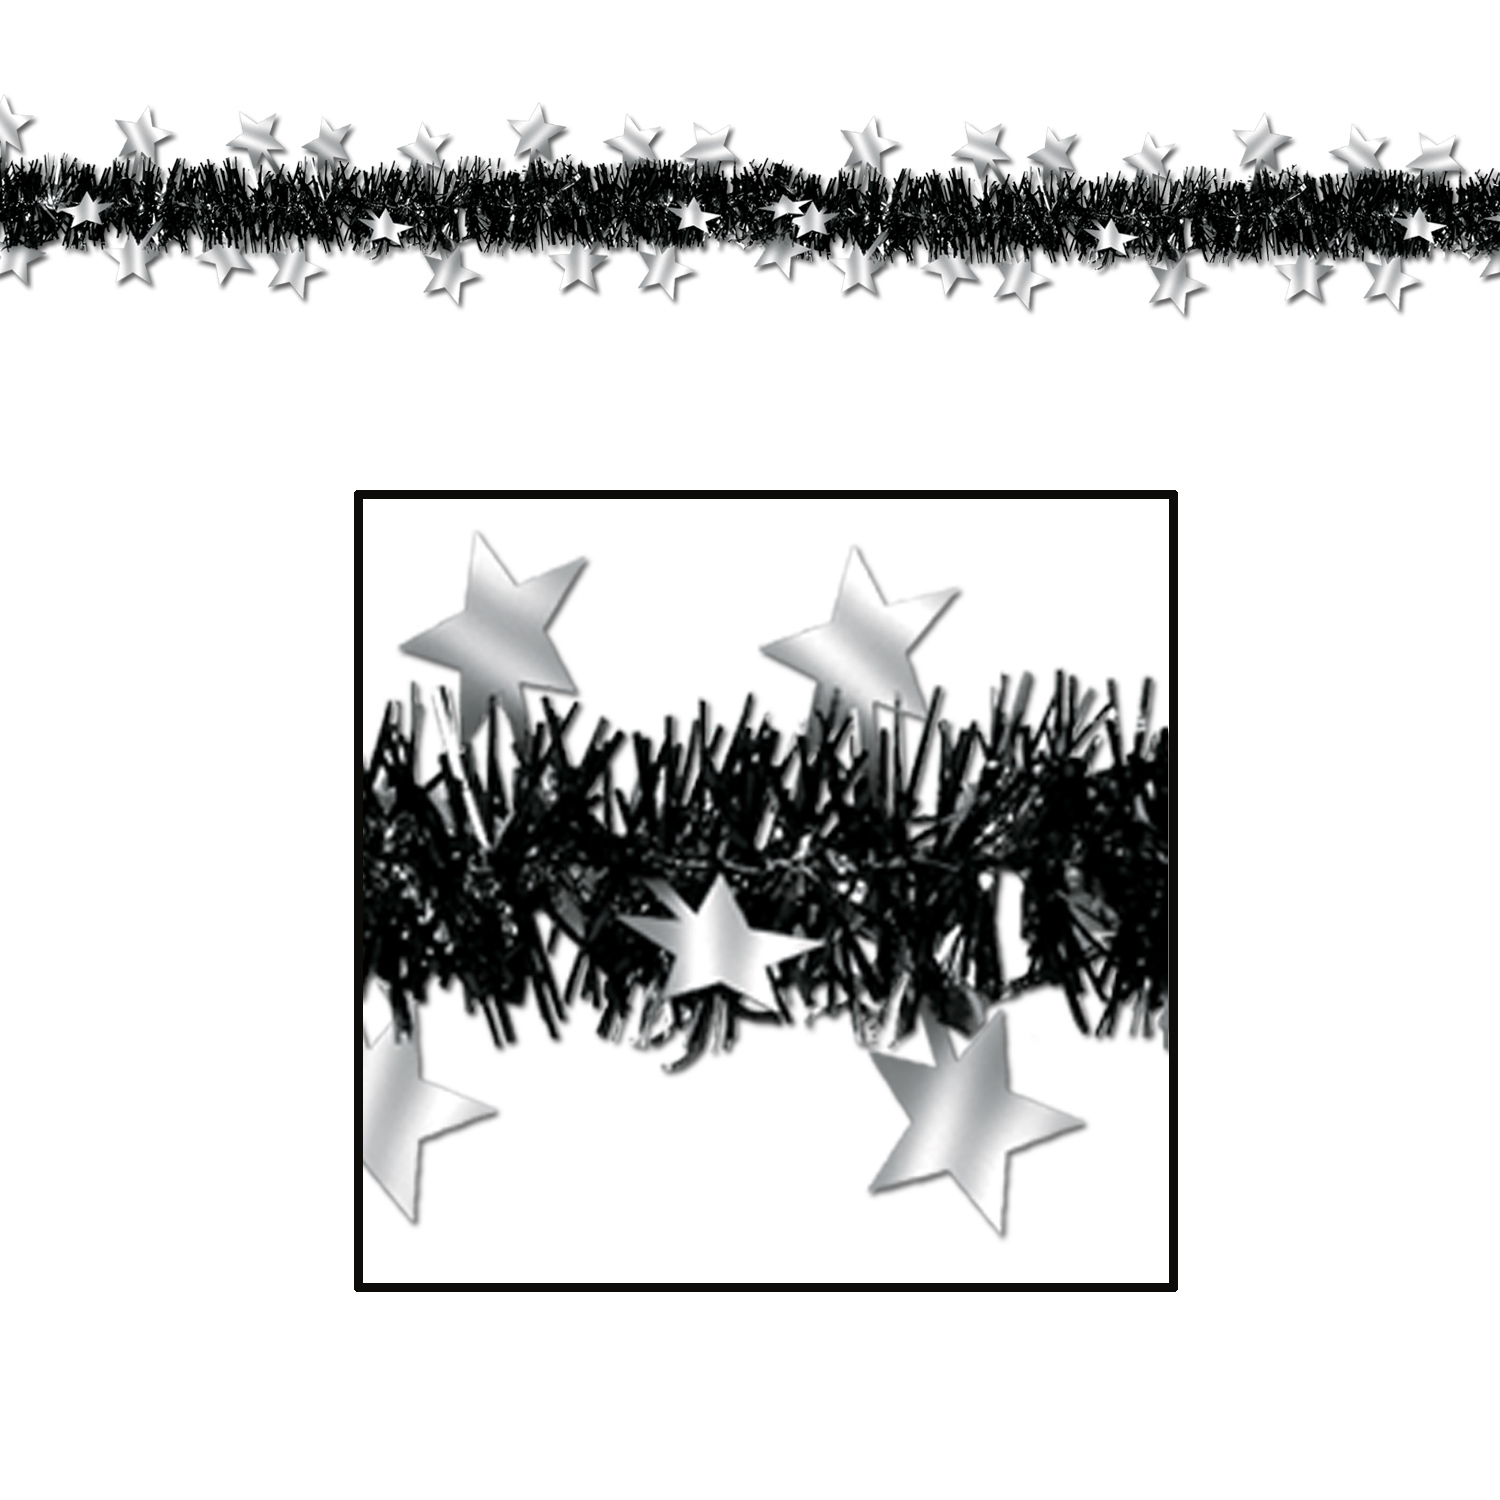 Black metallic fringe garland with silver metallic stars. 